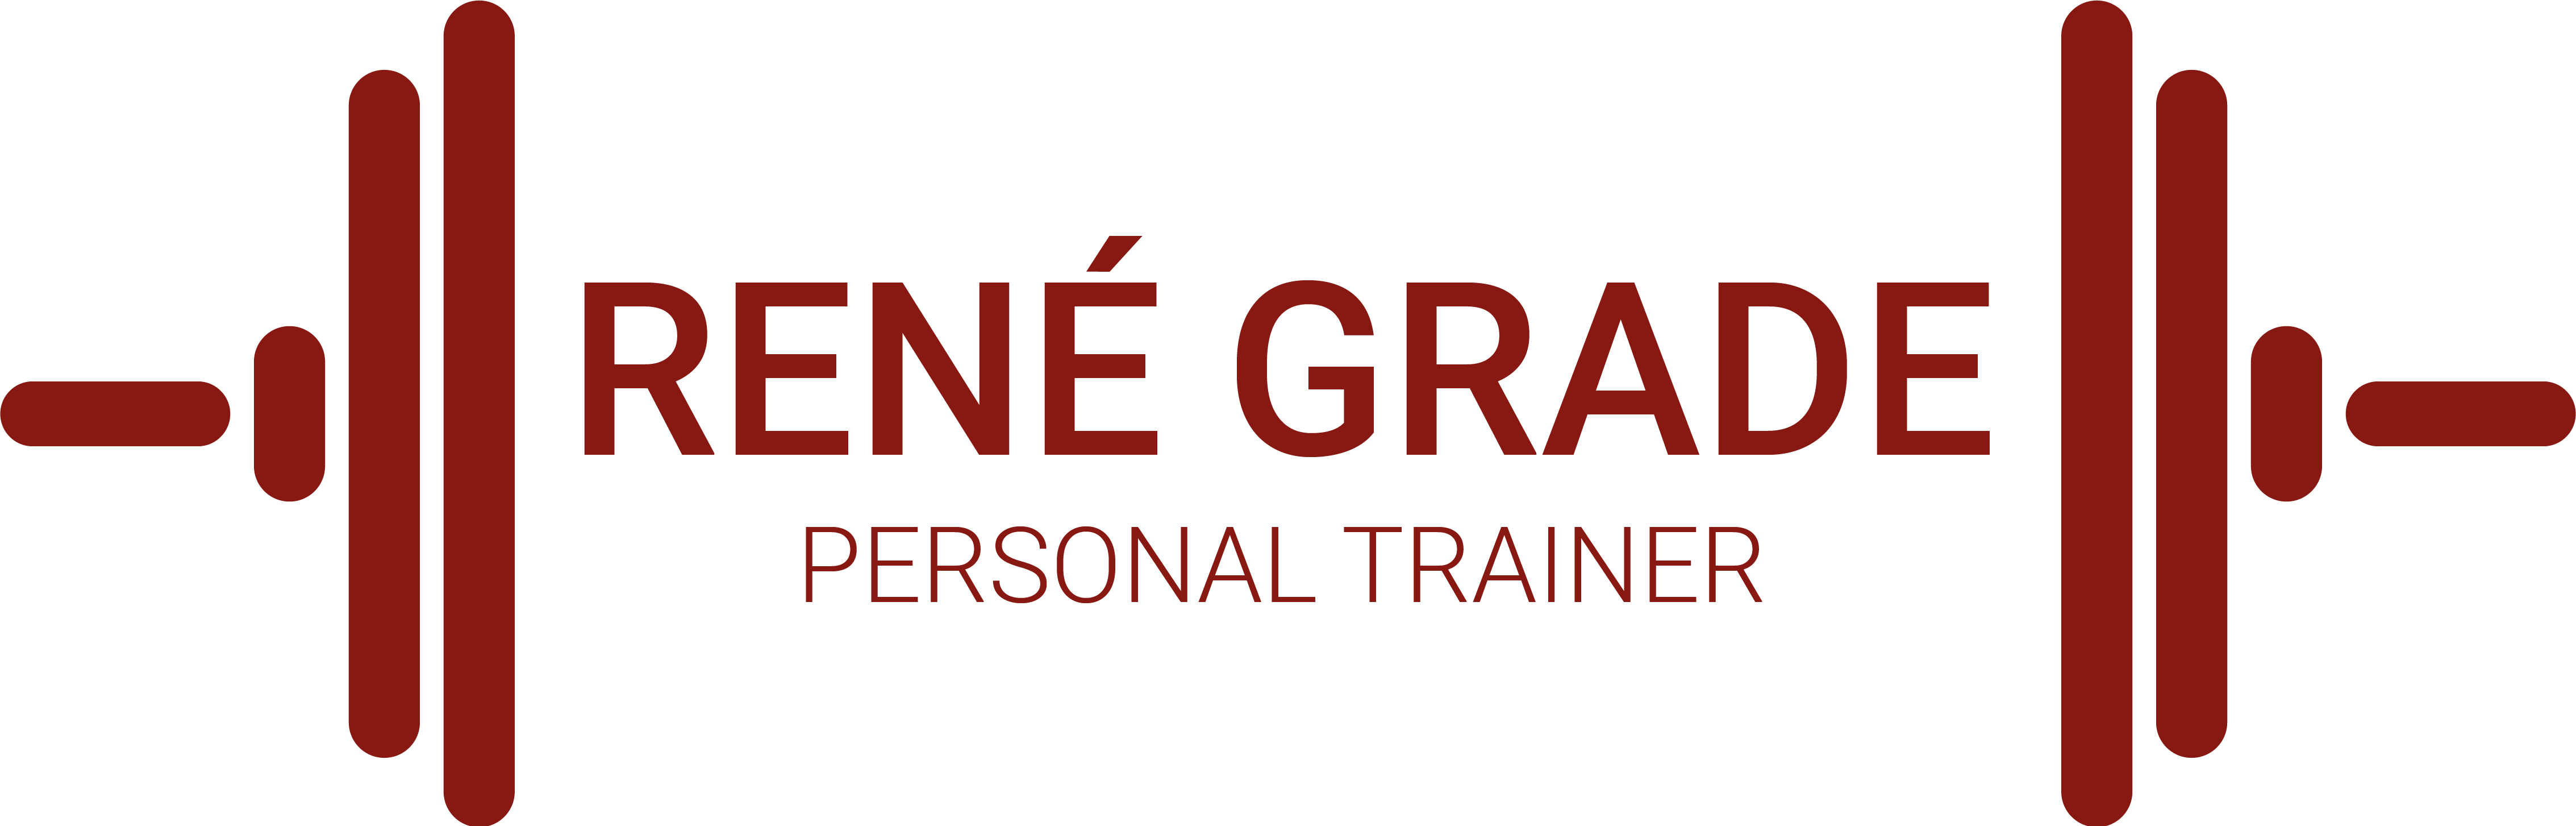 Personal Training René Grade